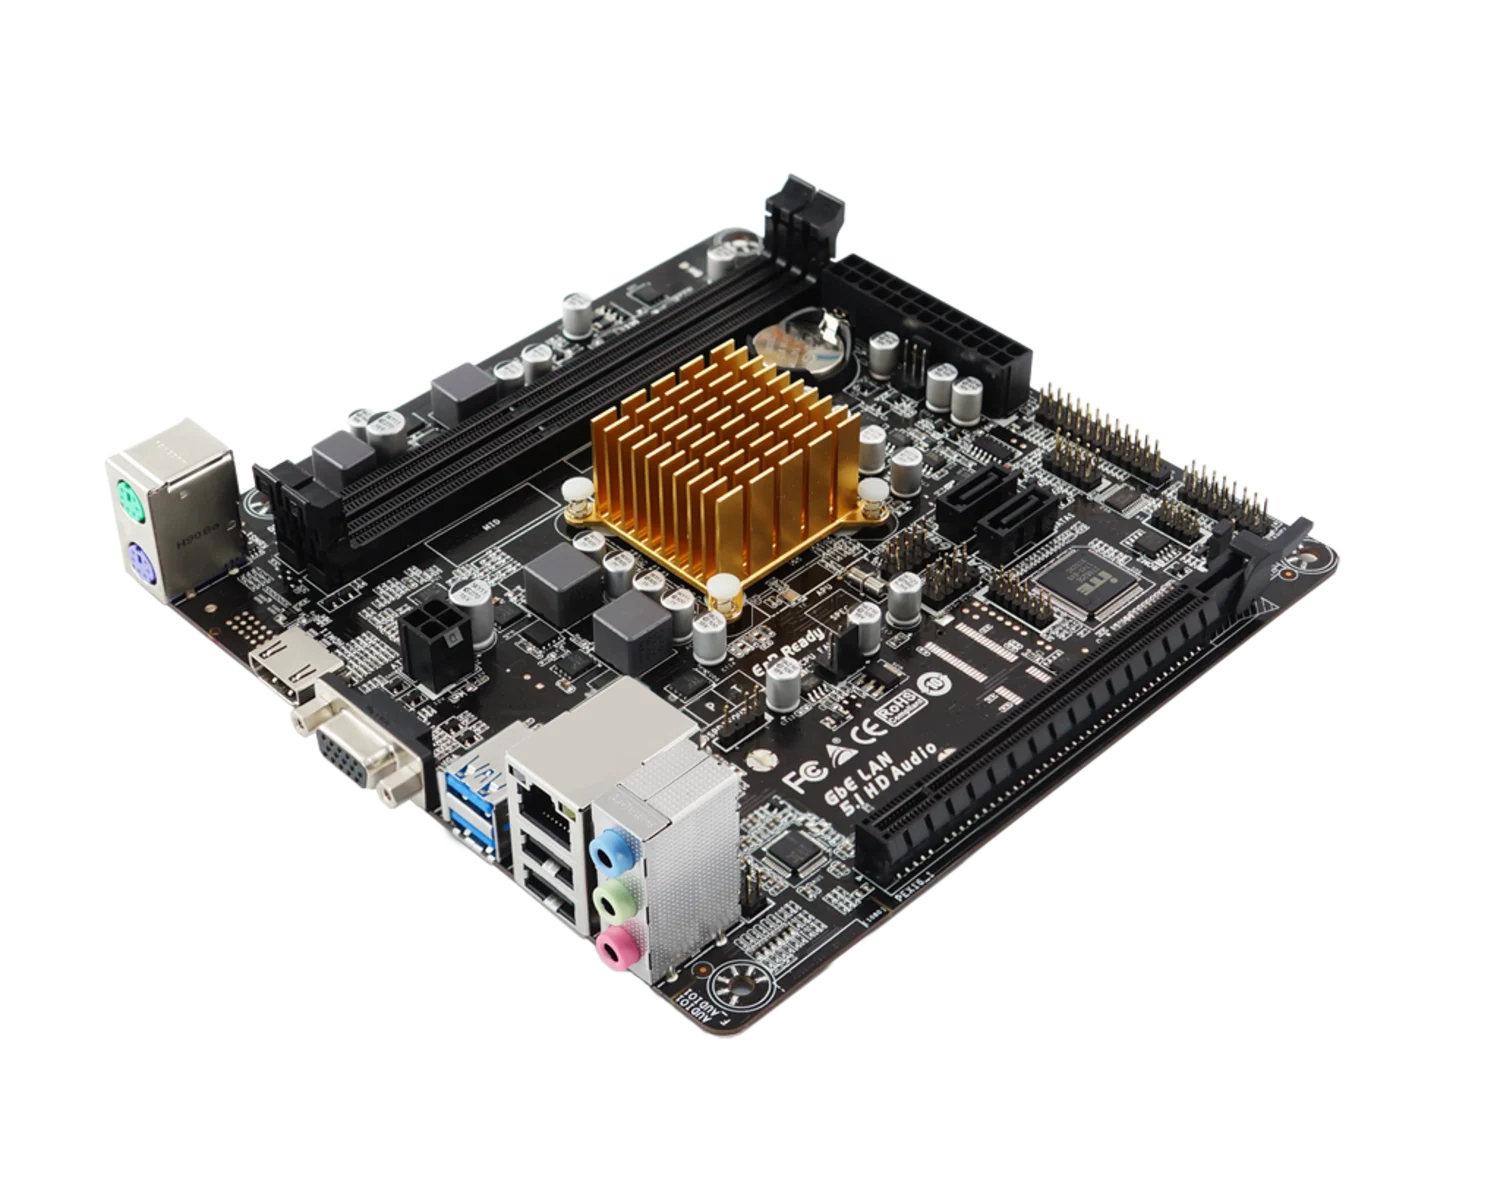 Placa Mãe Biostar A68N 2100K Chipset AMD Beema DDR3 Mini ITX Processador Dual Core AMD E1-6010 2.0